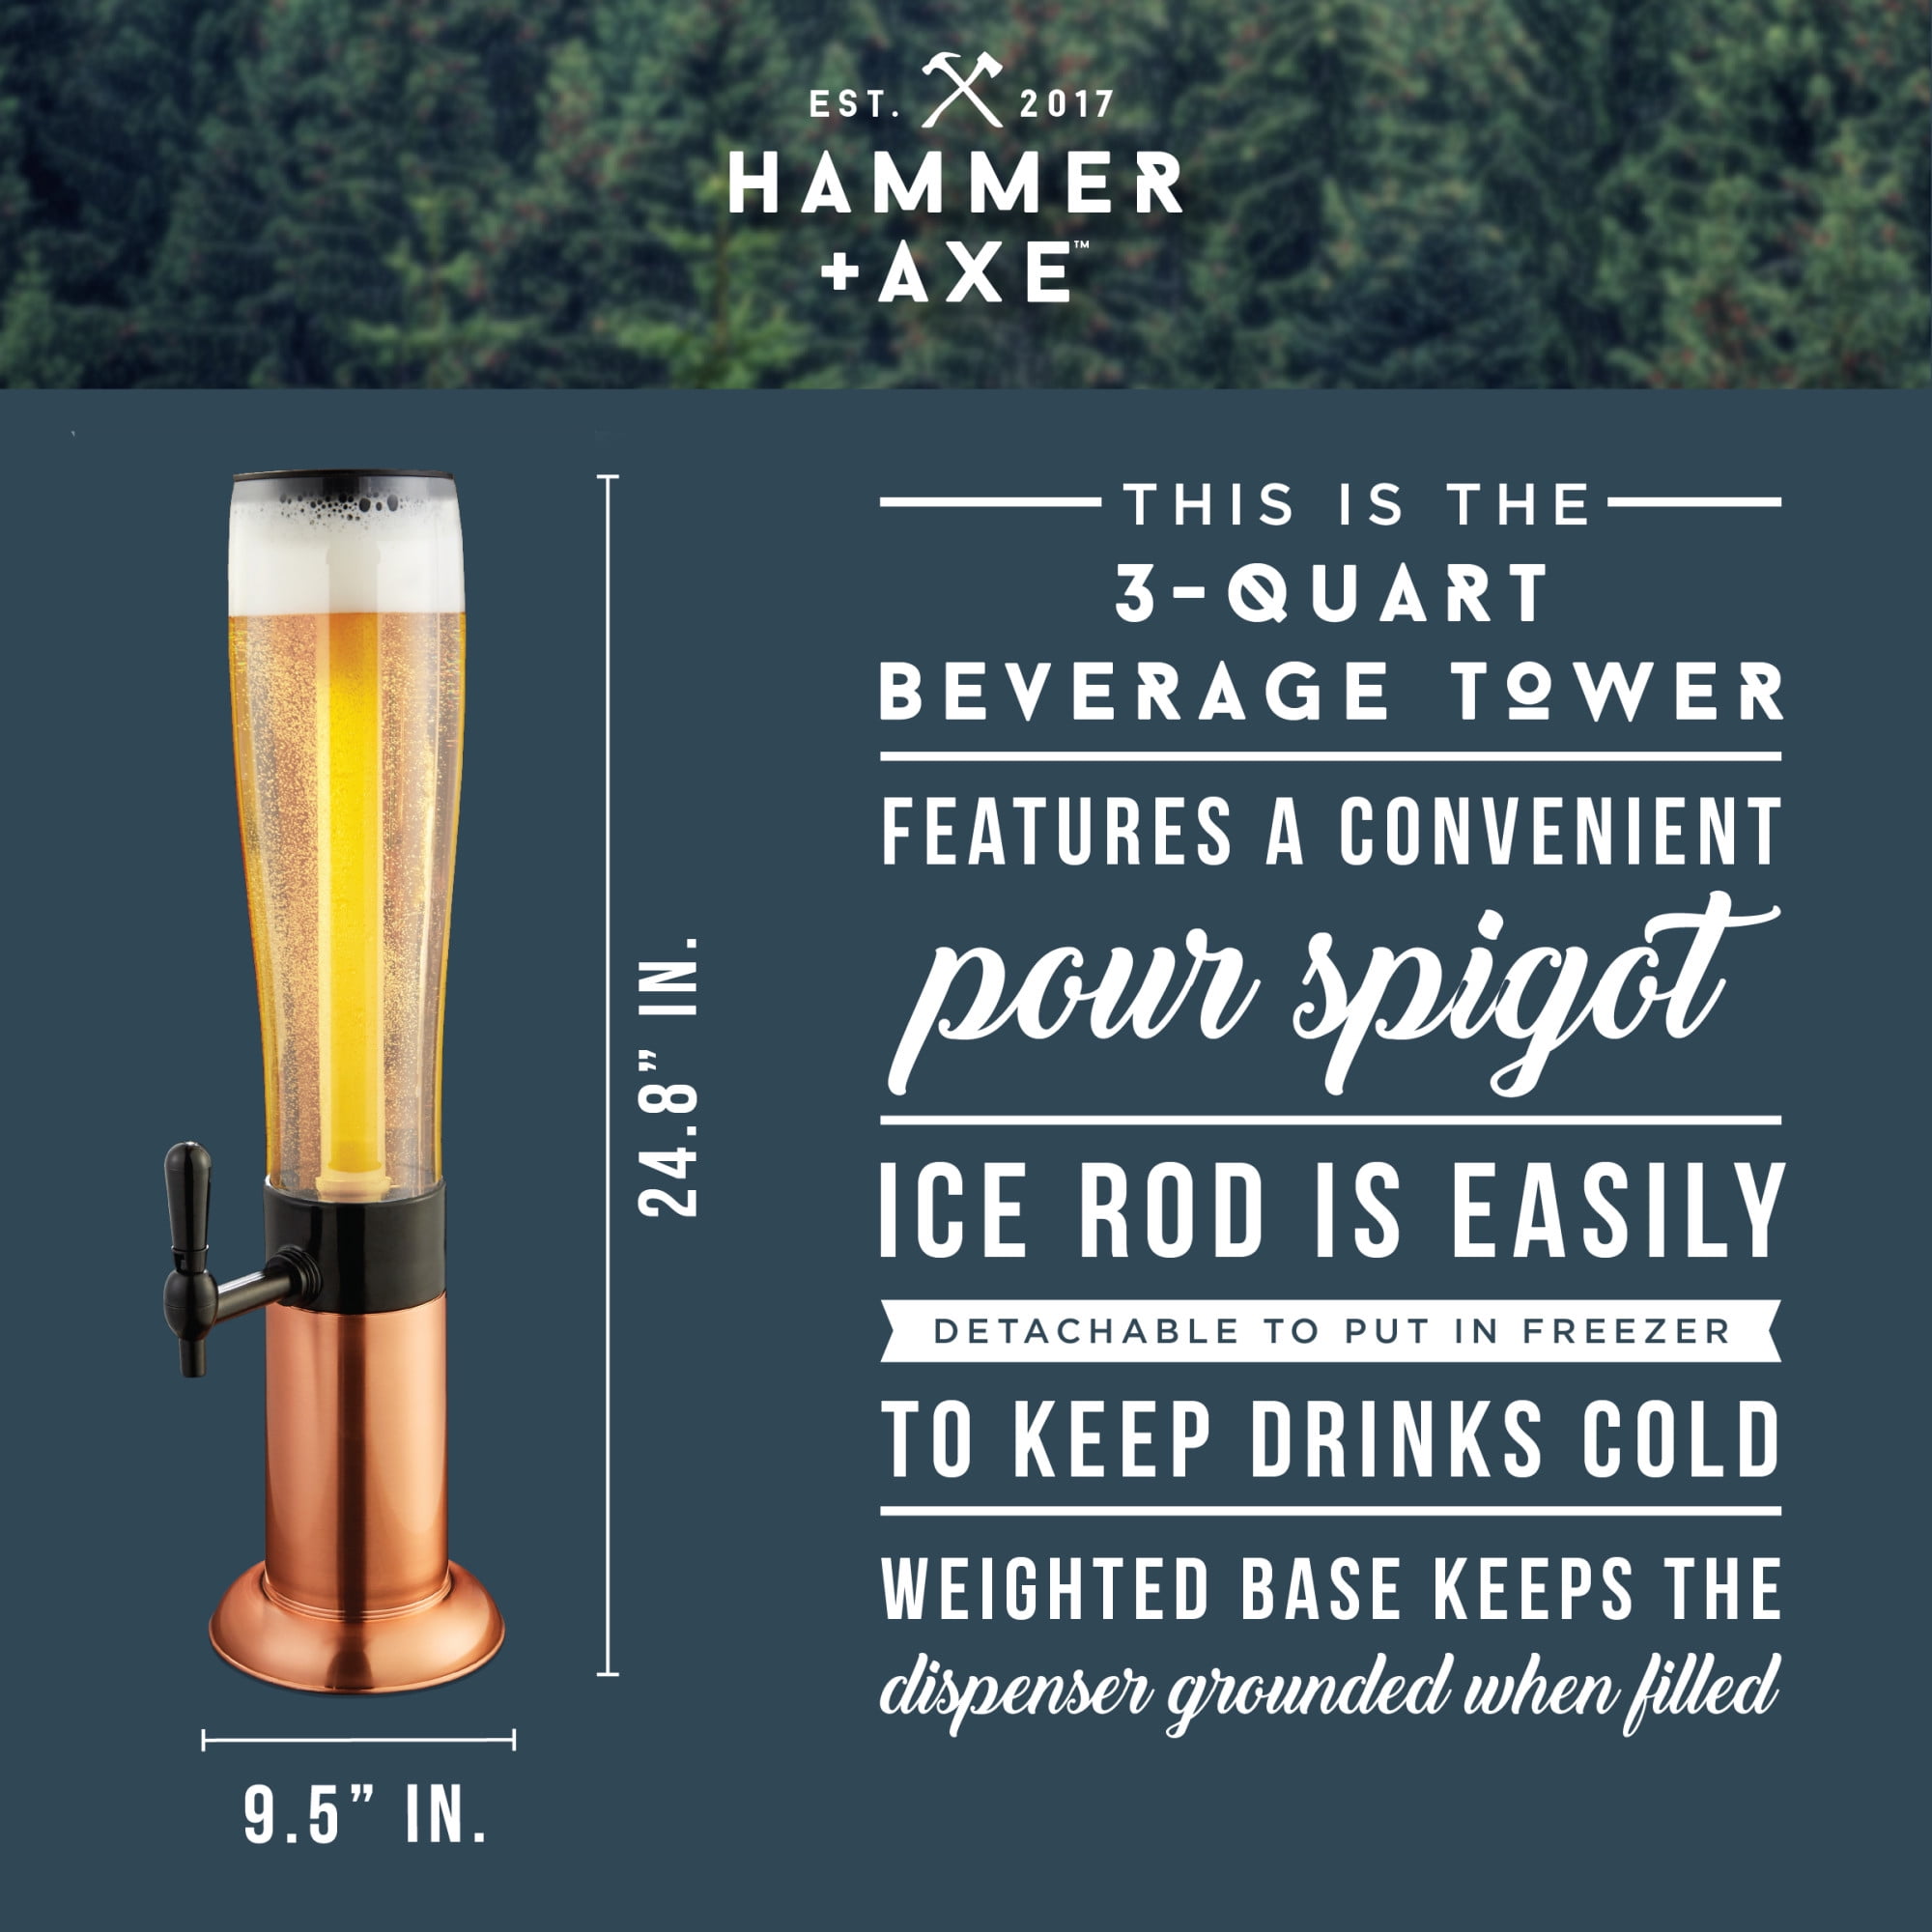 Hammer + Axe 3 Quart Beer Tower